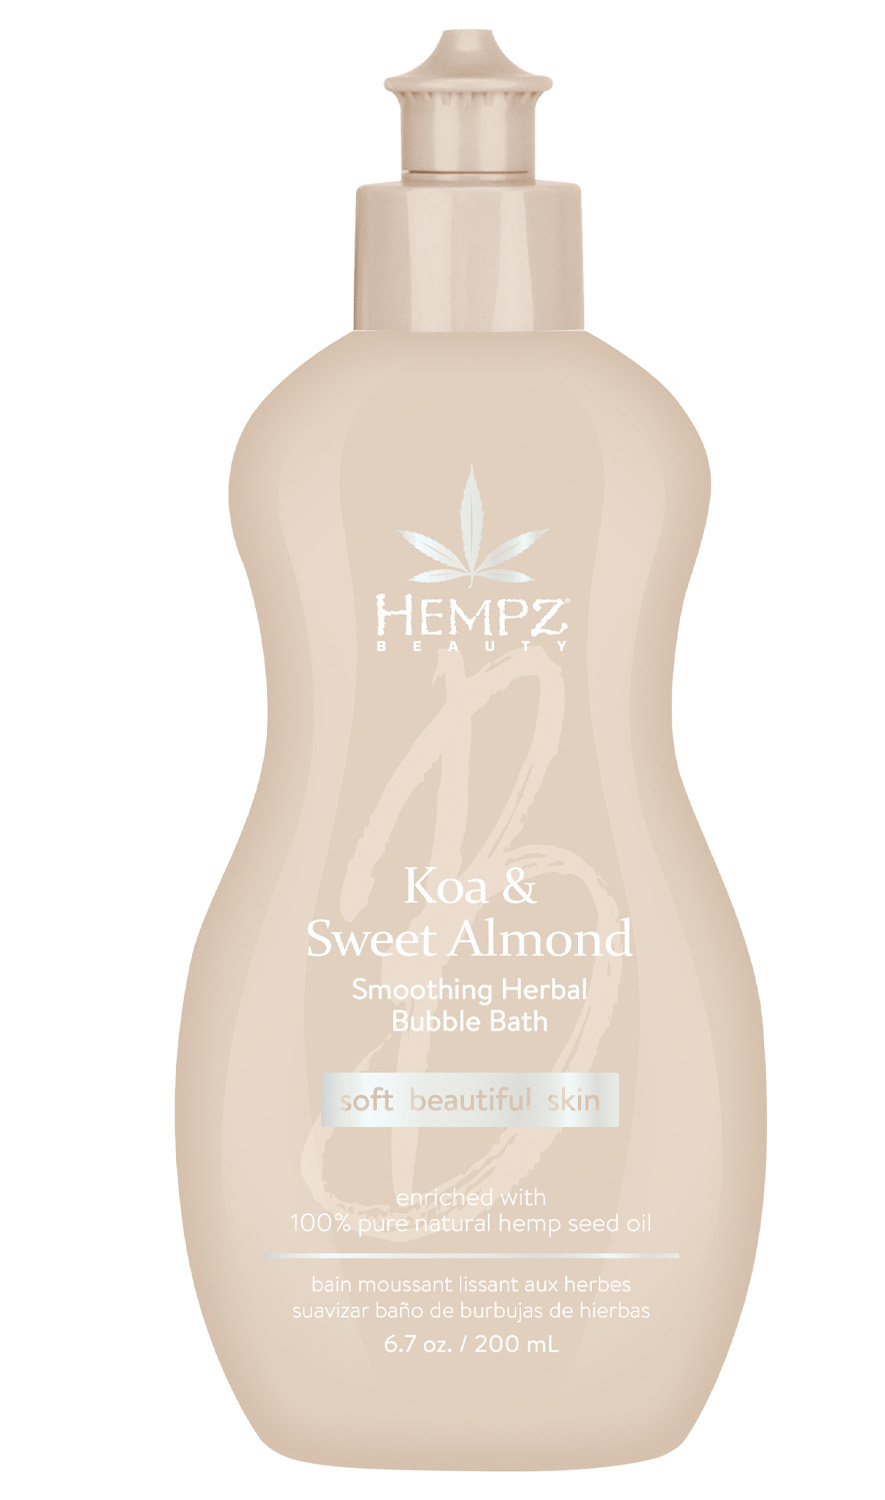 Hempz Смягчающая пена для ванны c экстрактом миндаля Koa & Sweet Almond Smoothing Herbal Body Wash & Bubble Bath, 200 мл (Hempz, Коа и сладкий миндаль)